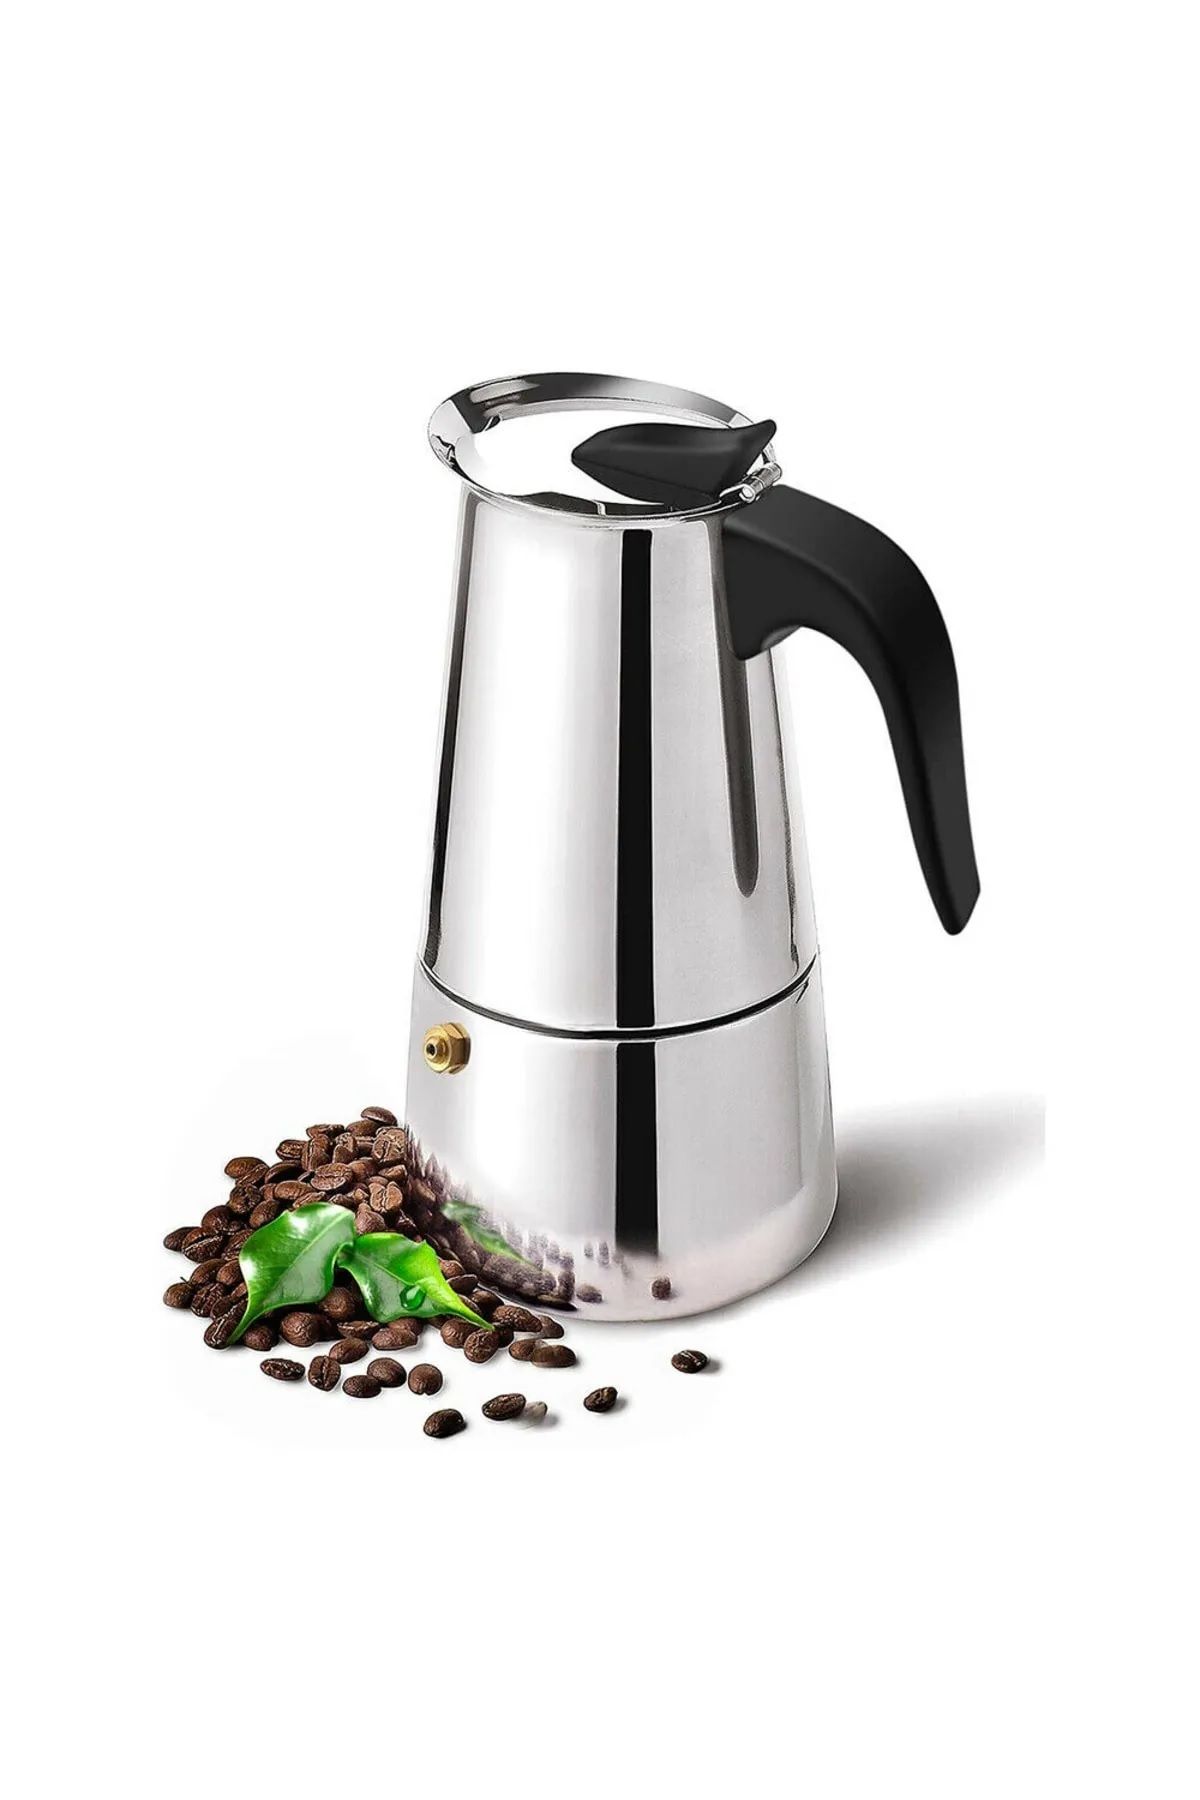 mordale Paslanmaz Çelik Ocak Üstü 6 Cup Fincan Moka Pot Espresso